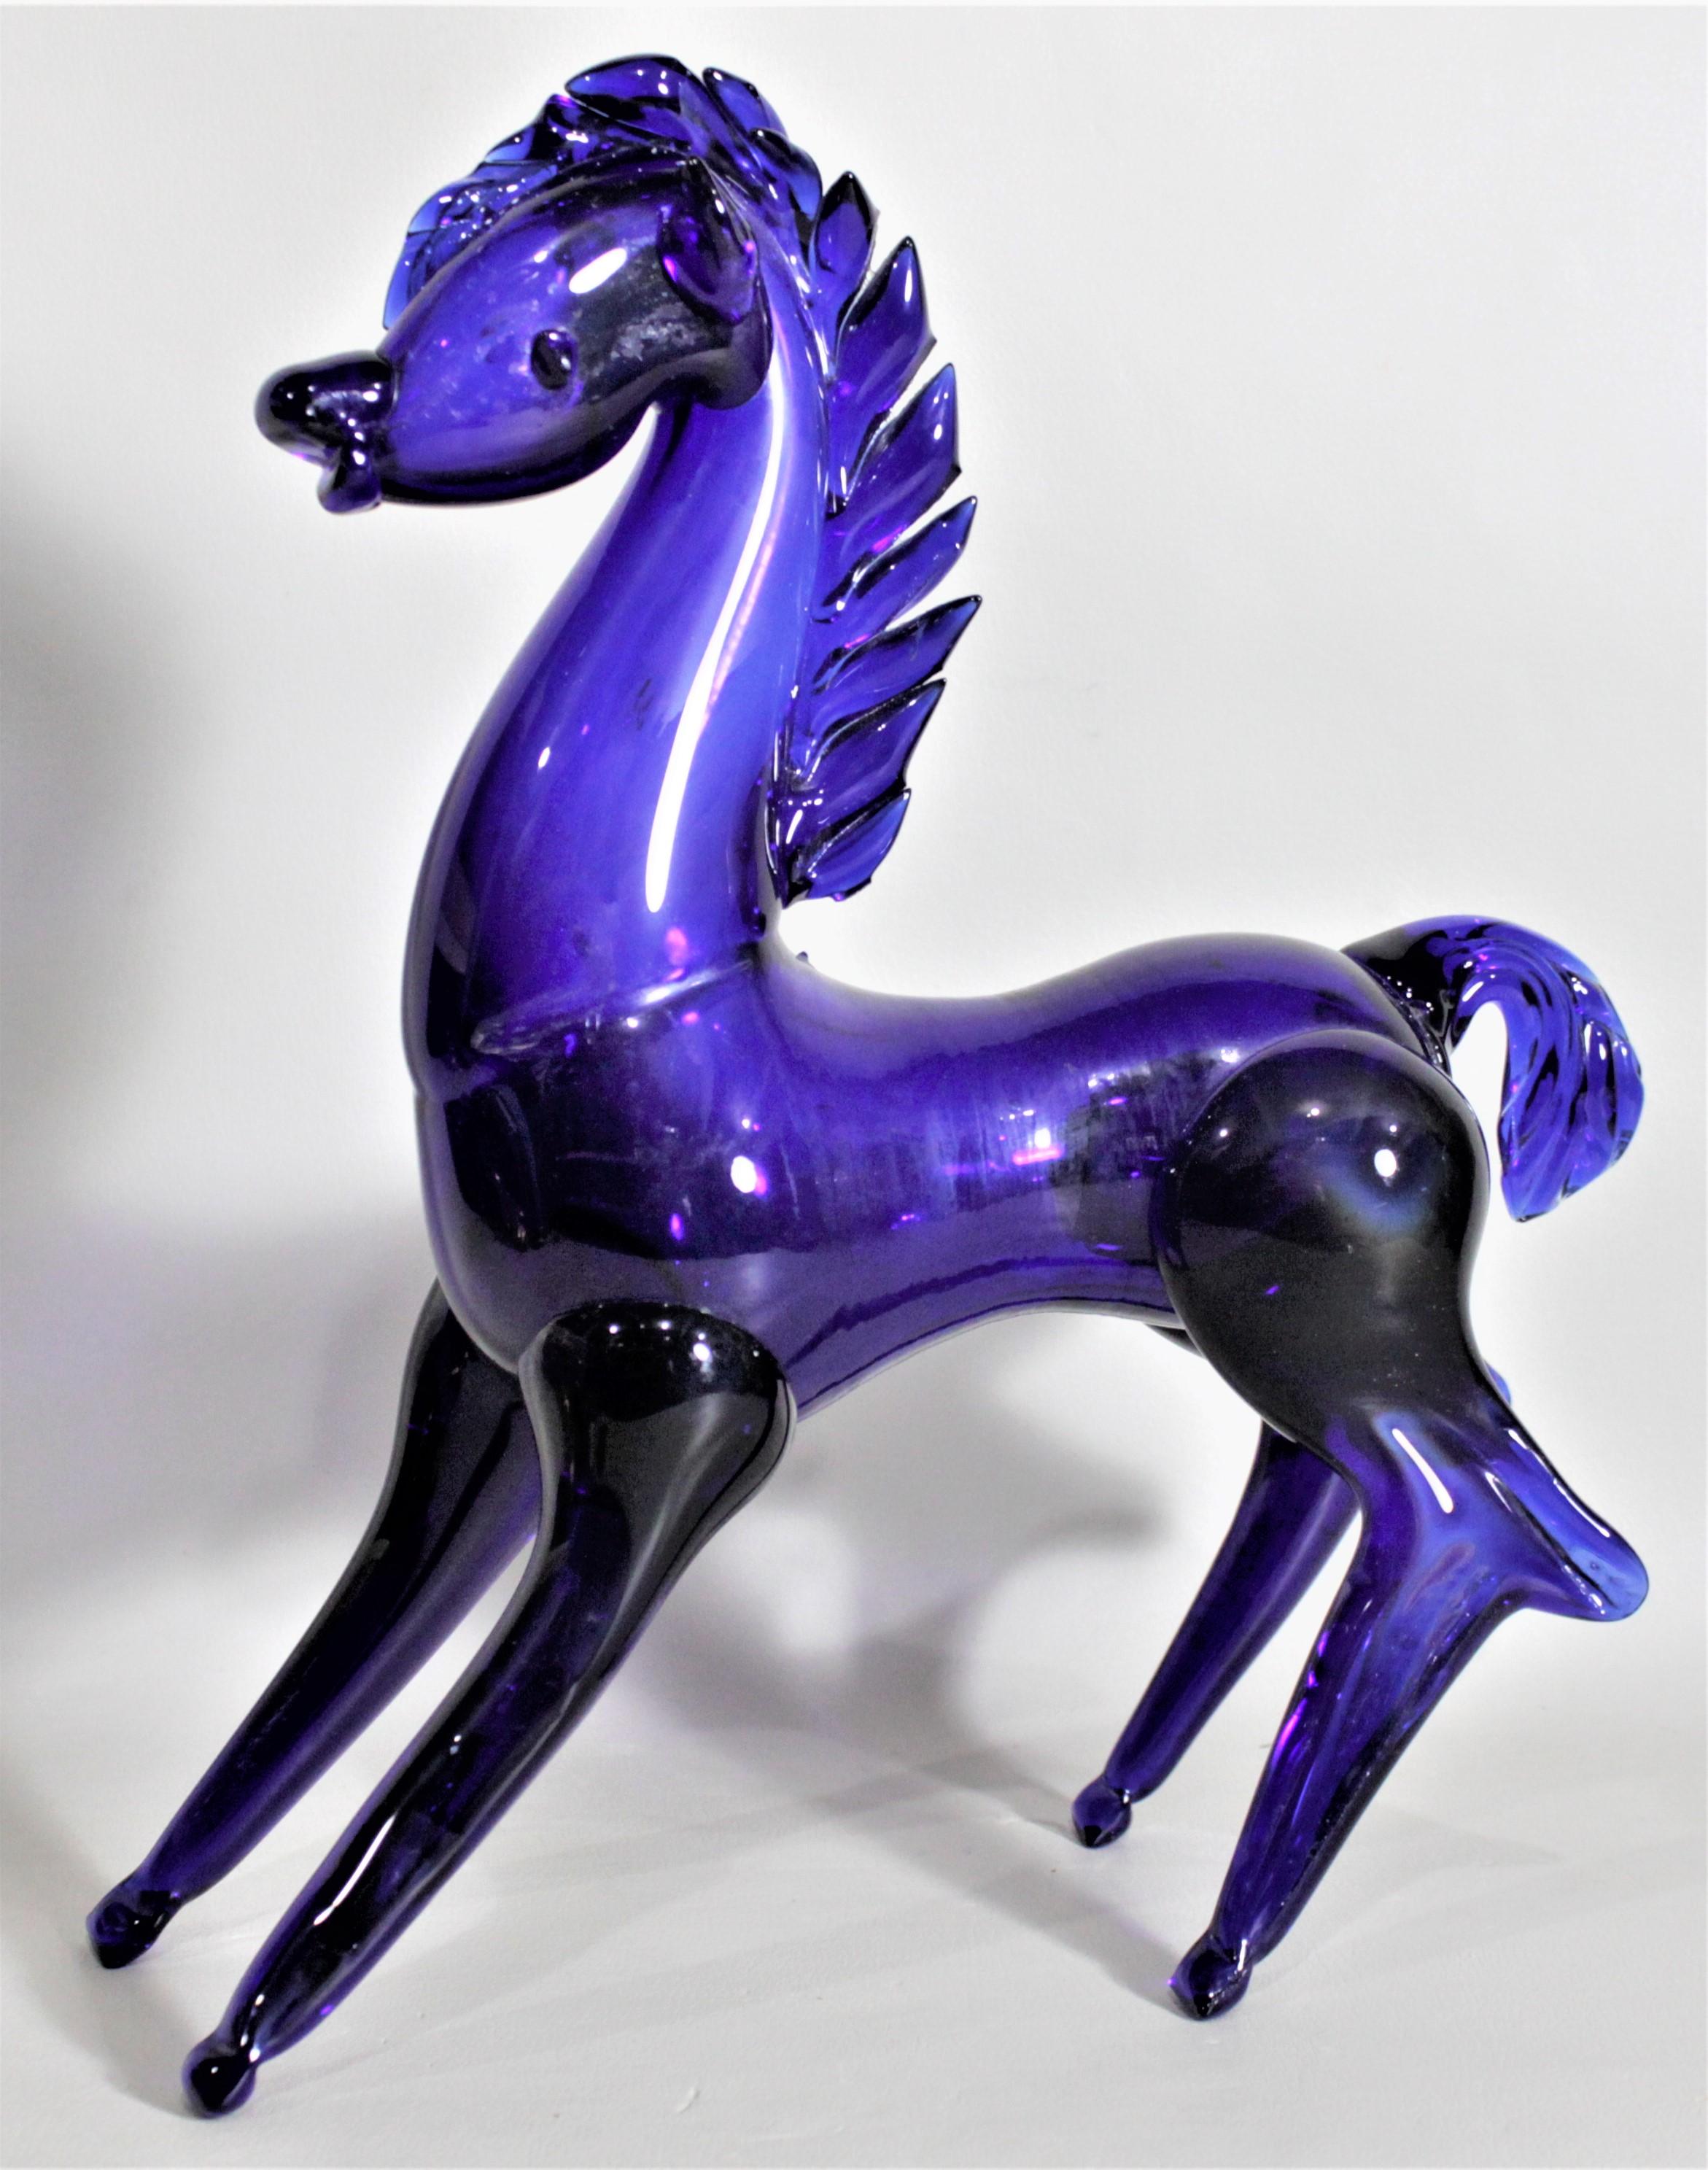 Hand-Crafted Mid-Century Modern Italian Cobalt Stylized Art Glass Horse Figurine or Sculpture